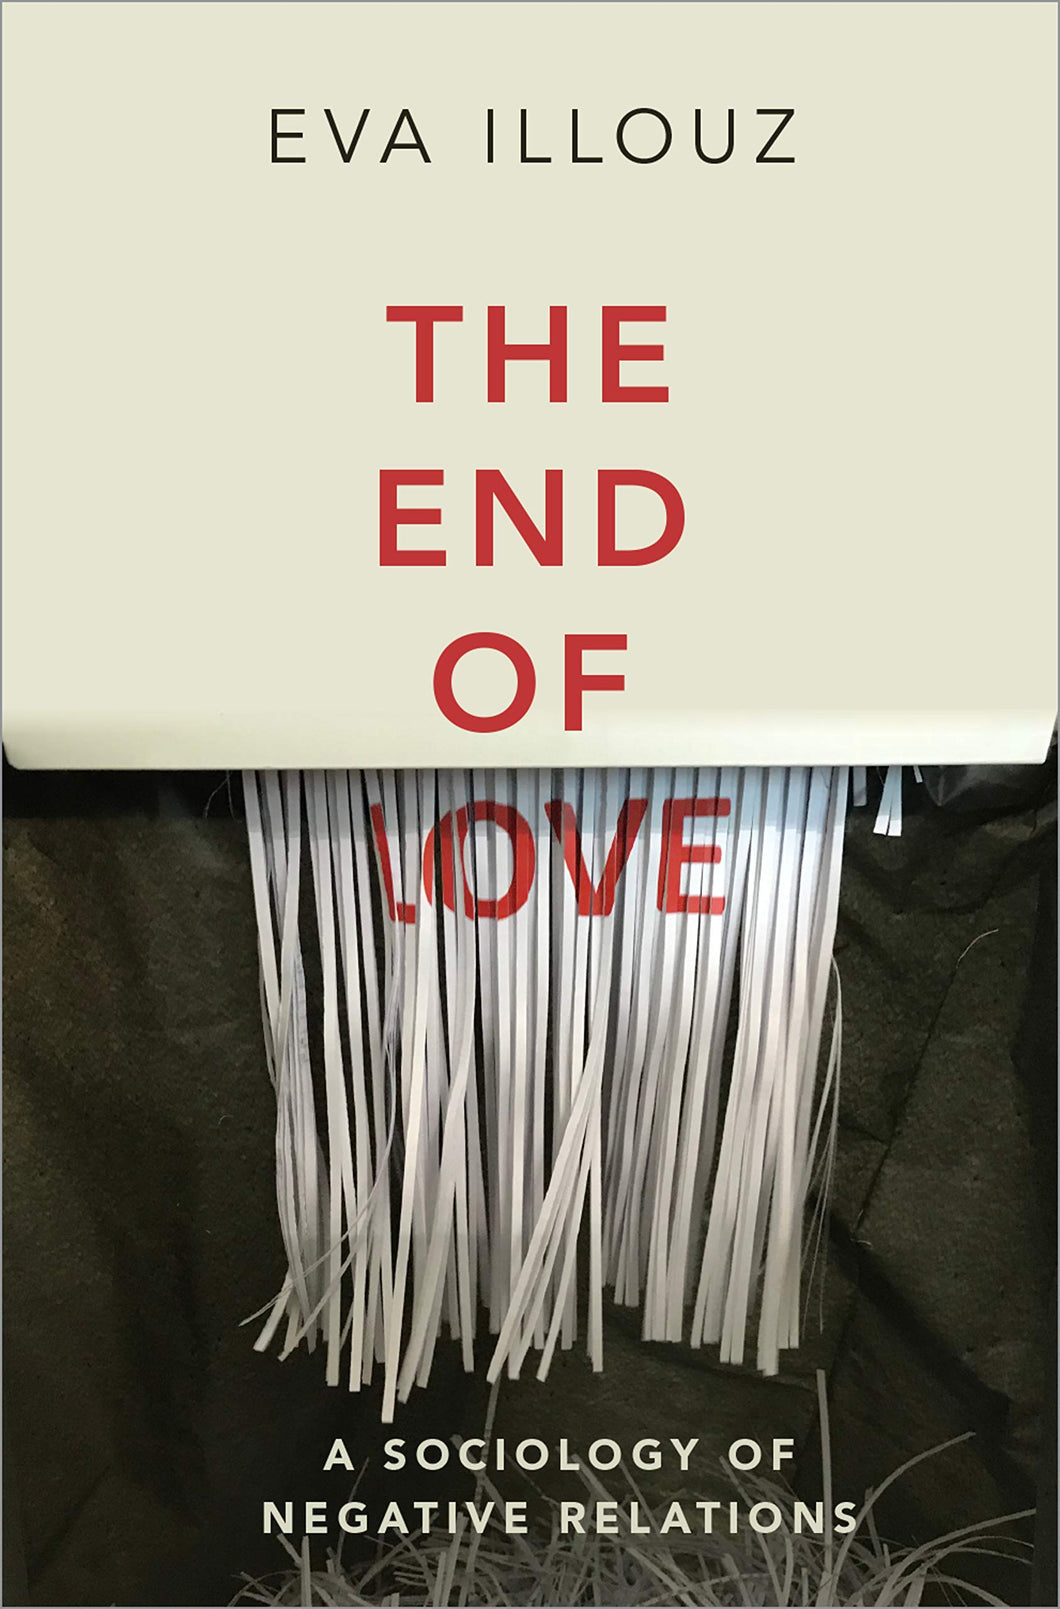 The End of Love : A Sociology of Negative Relations ร้านหนังสือและสิ่งของ เป็นร้านหนังสือภาษาอังกฤษหายาก และร้านกาแฟ หรือ บุ๊คคาเฟ่ ตั้งอยู่สุขุมวิท กรุงเทพ